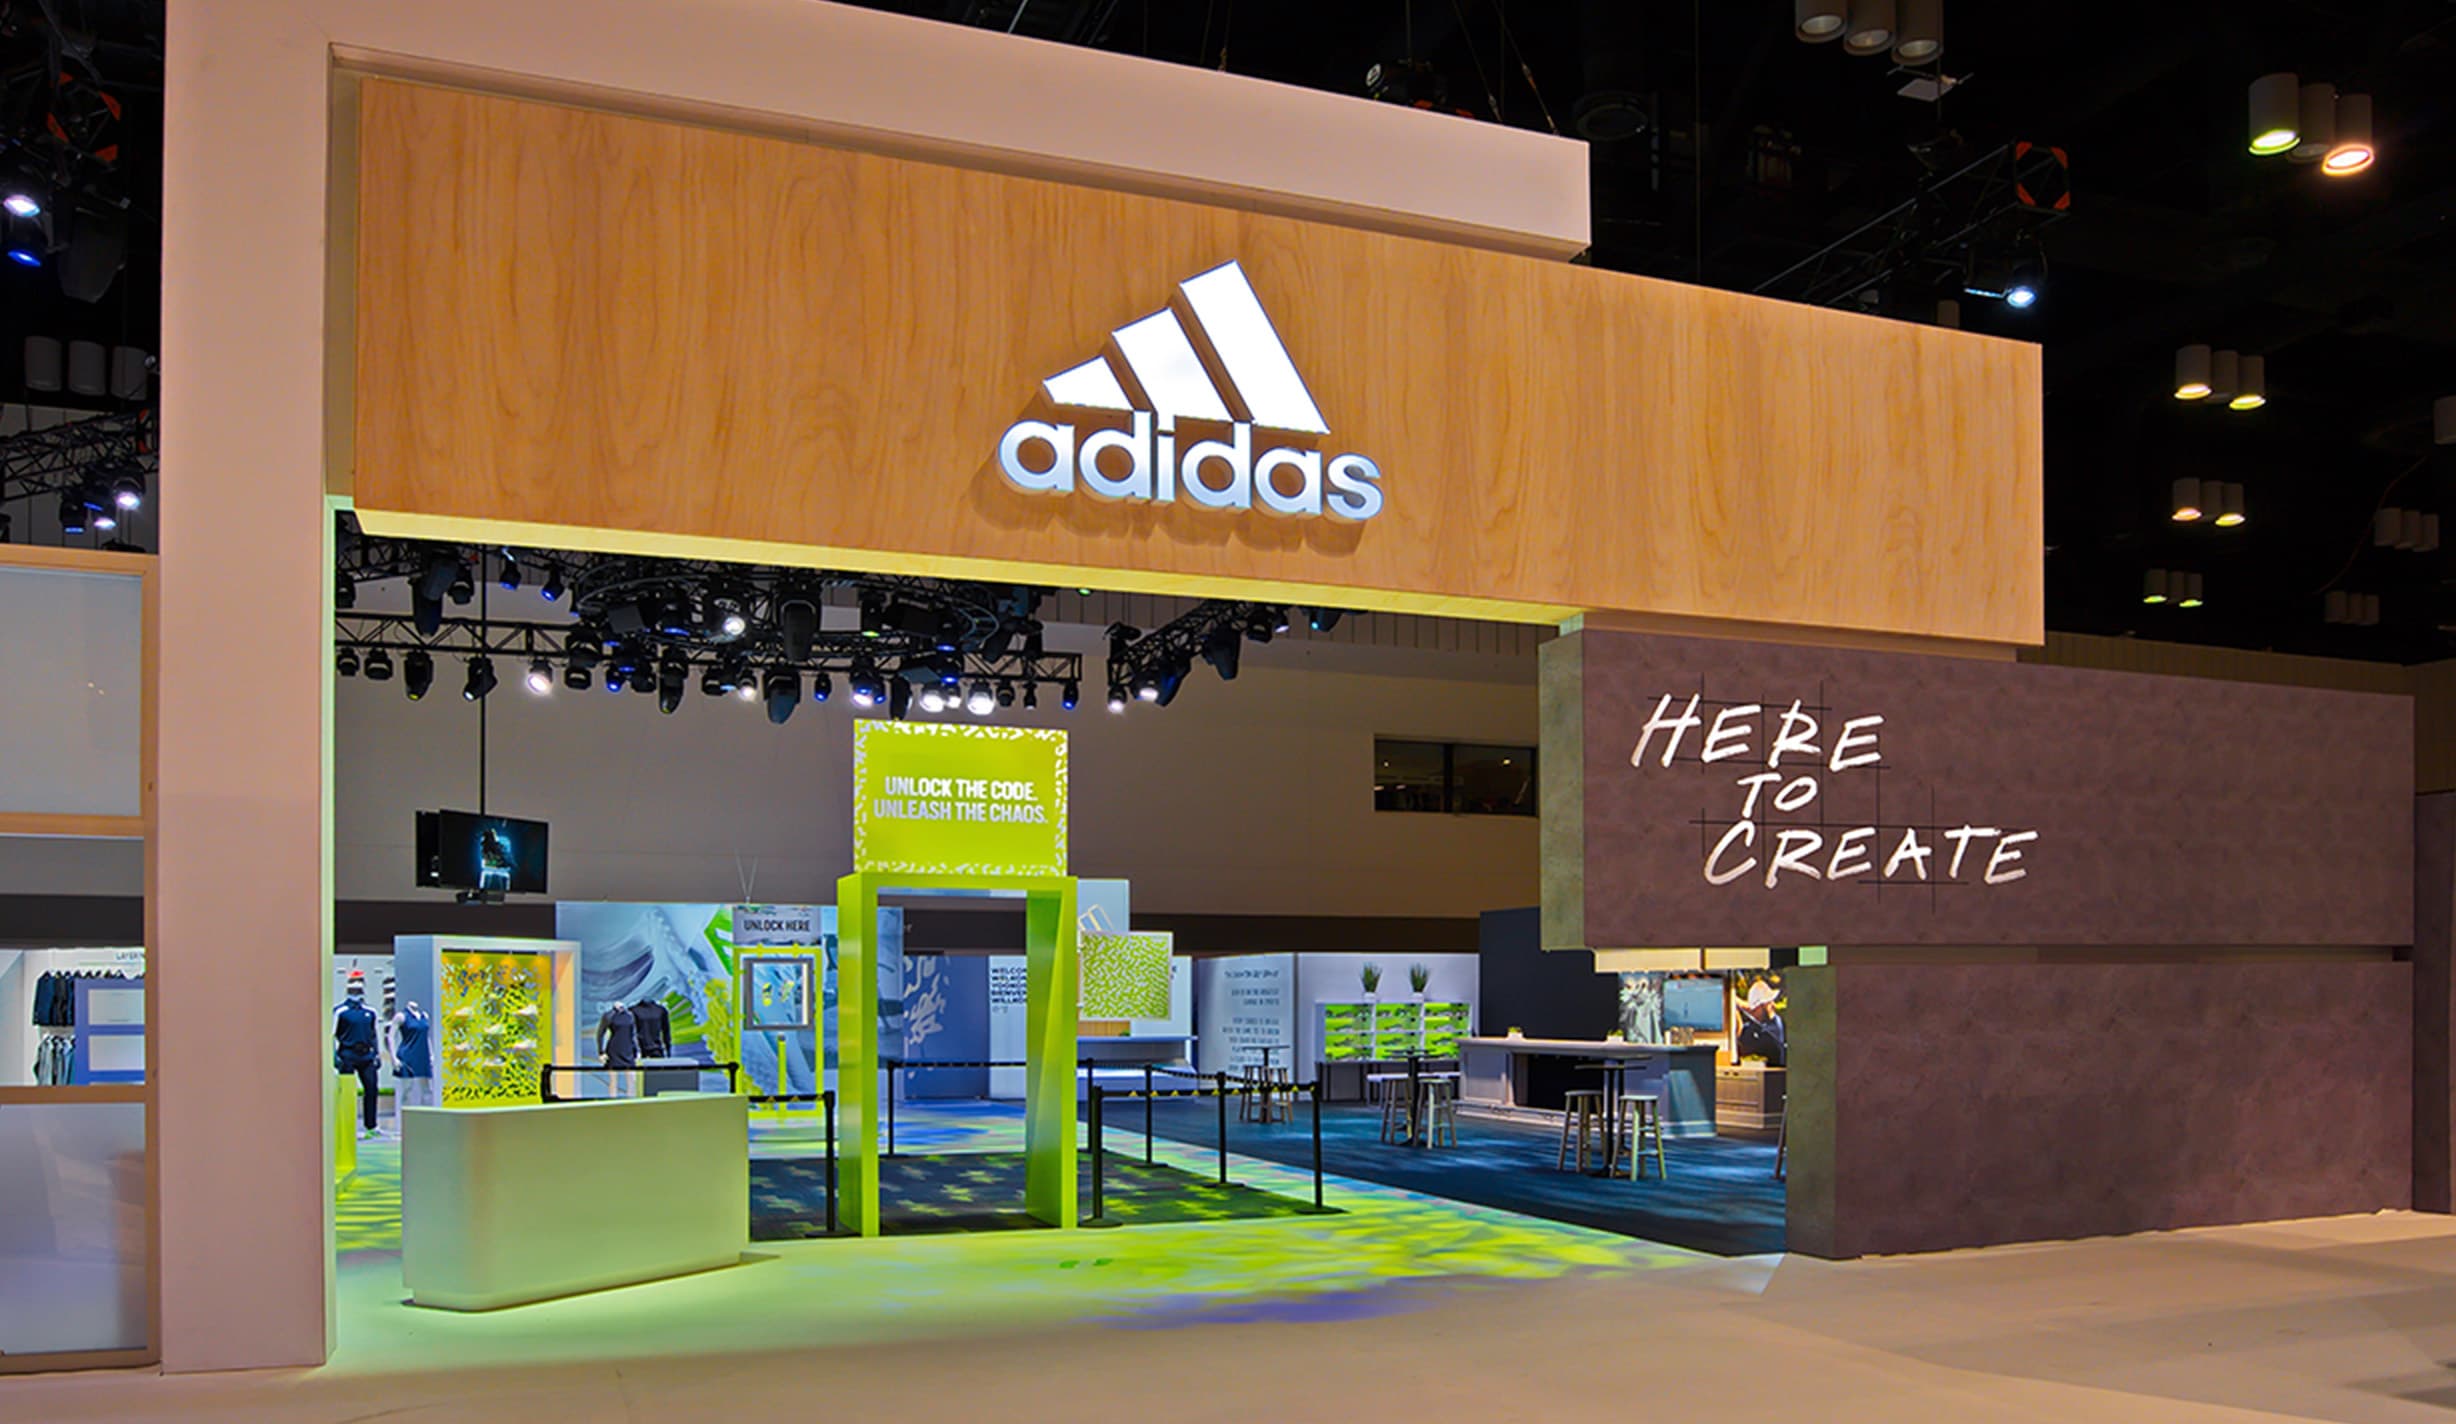 Adidas PGA Merchandise Show booth